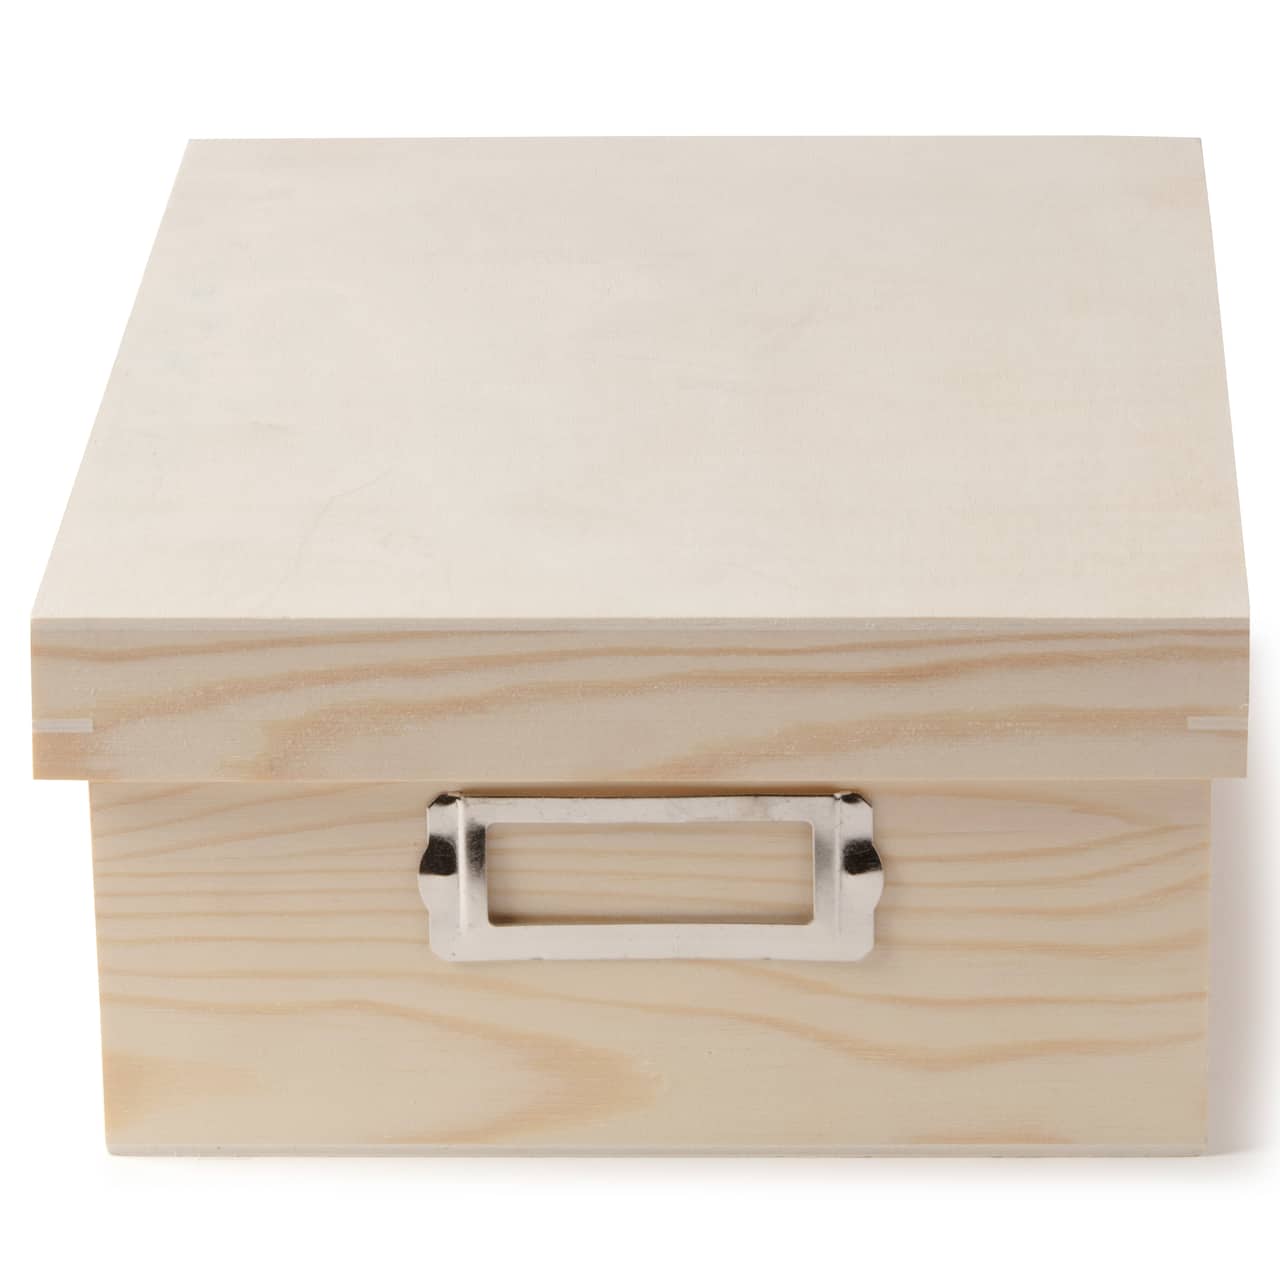 Wooden Photo Box by Make Market&#xAE;